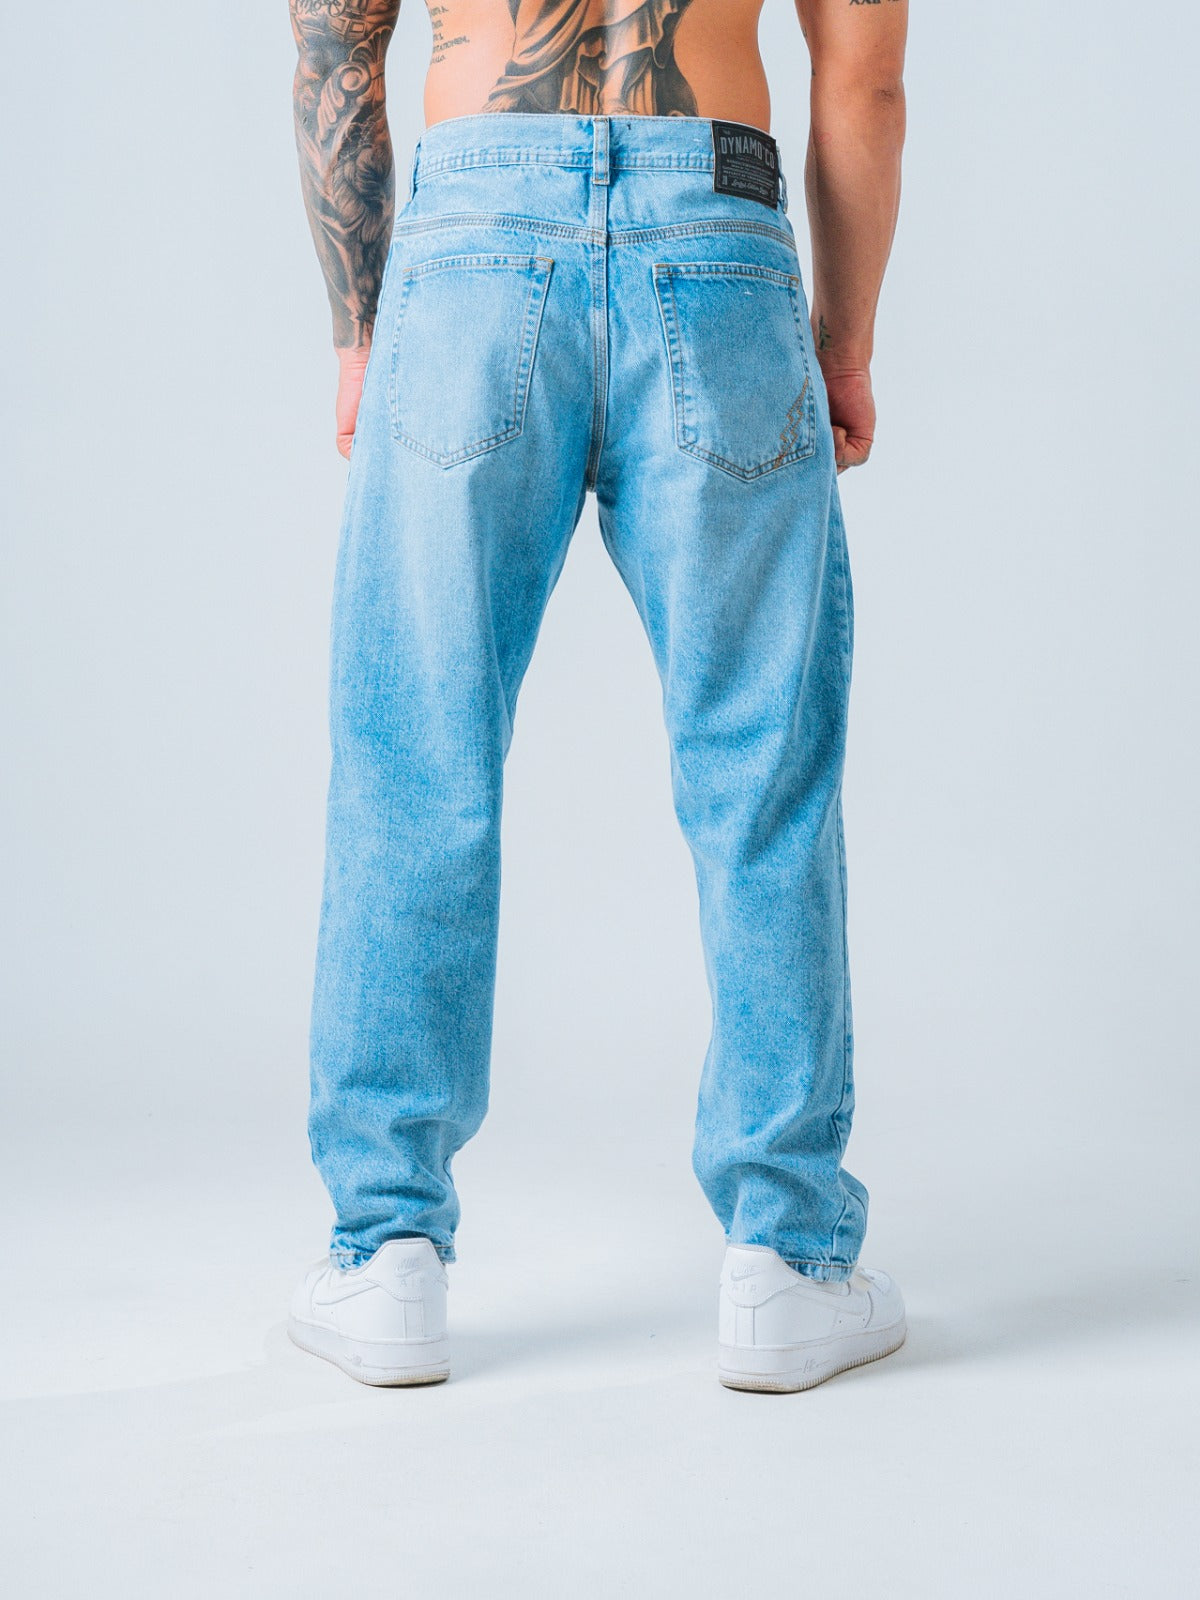 Jeans Vintage Azul DNM - Ref 354